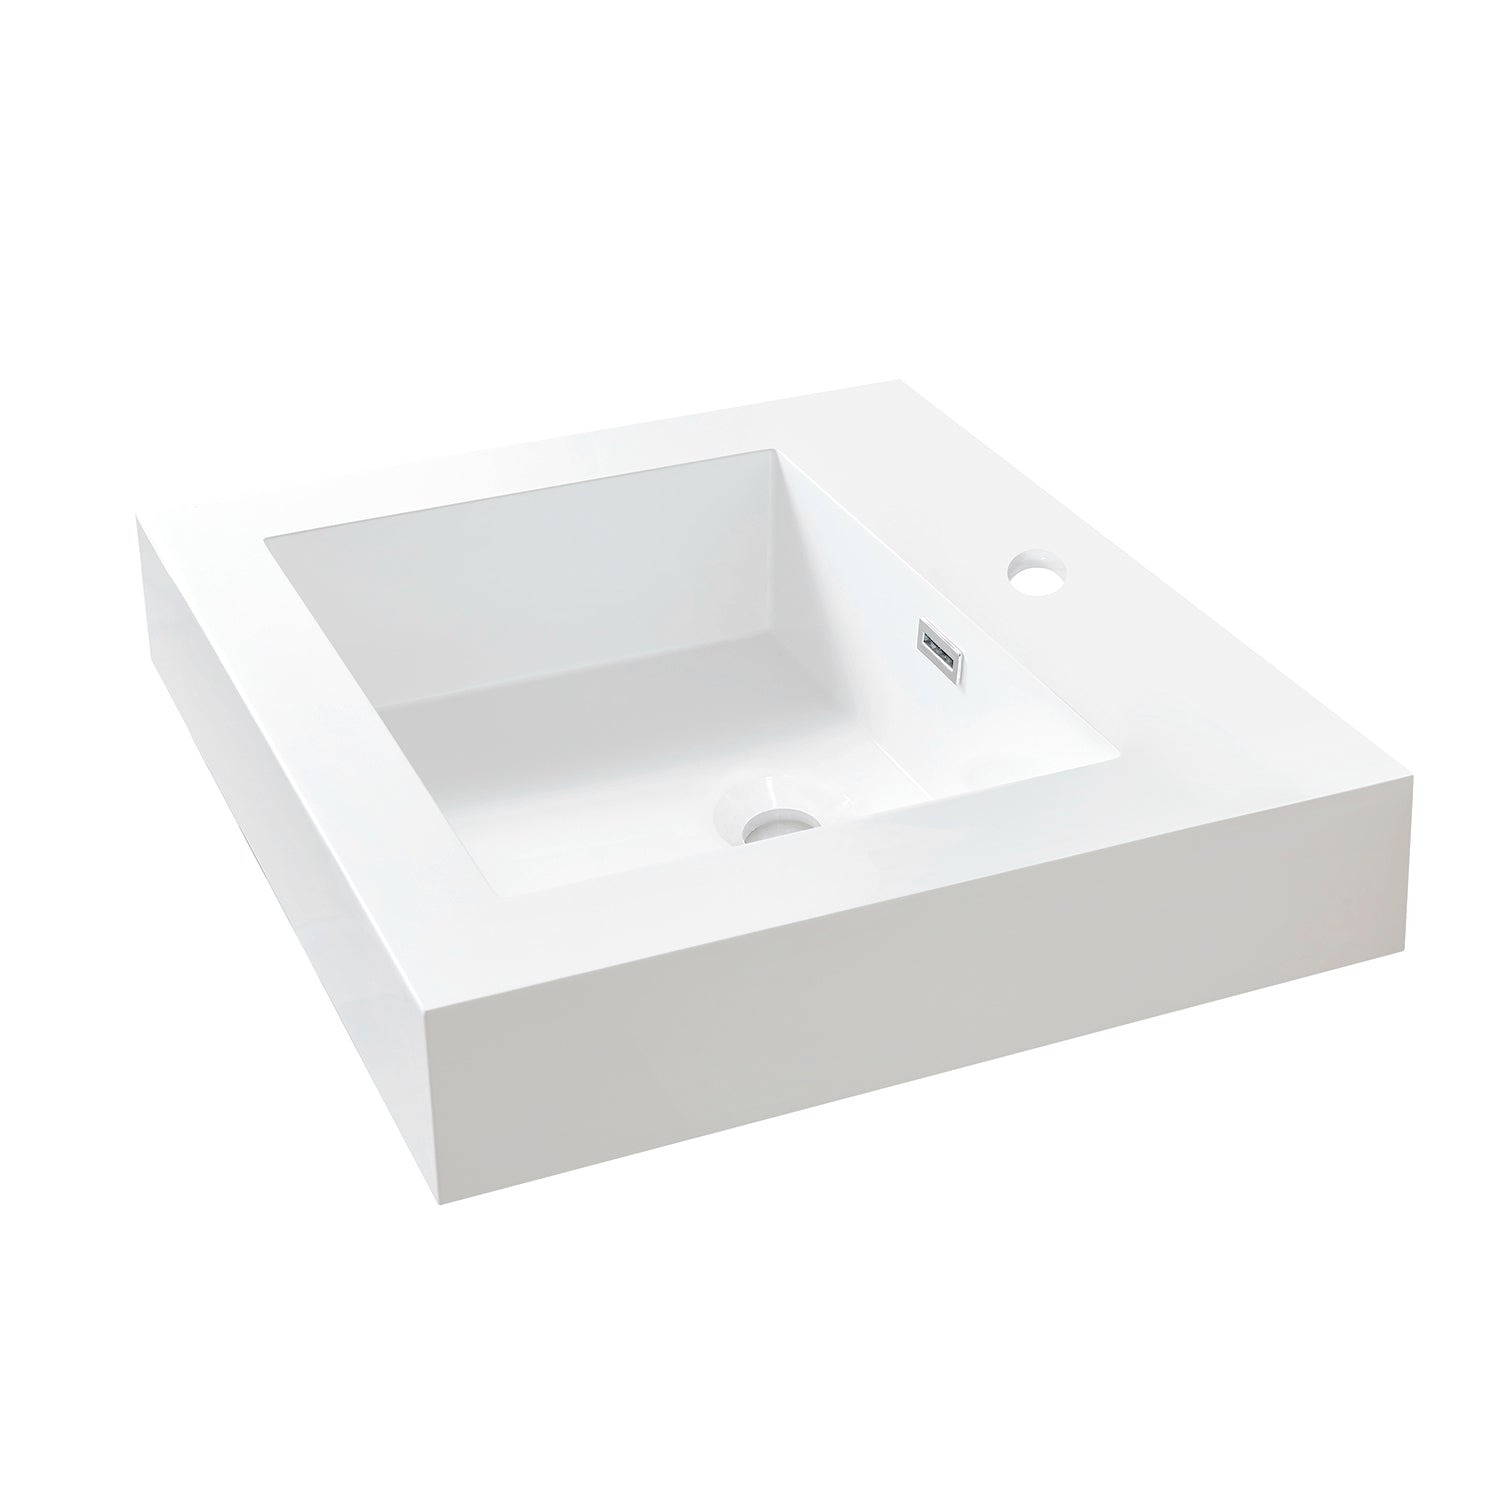 Ablitas Square White Finish Composite Granite Stone Vessel Bathroom Vanity Sink